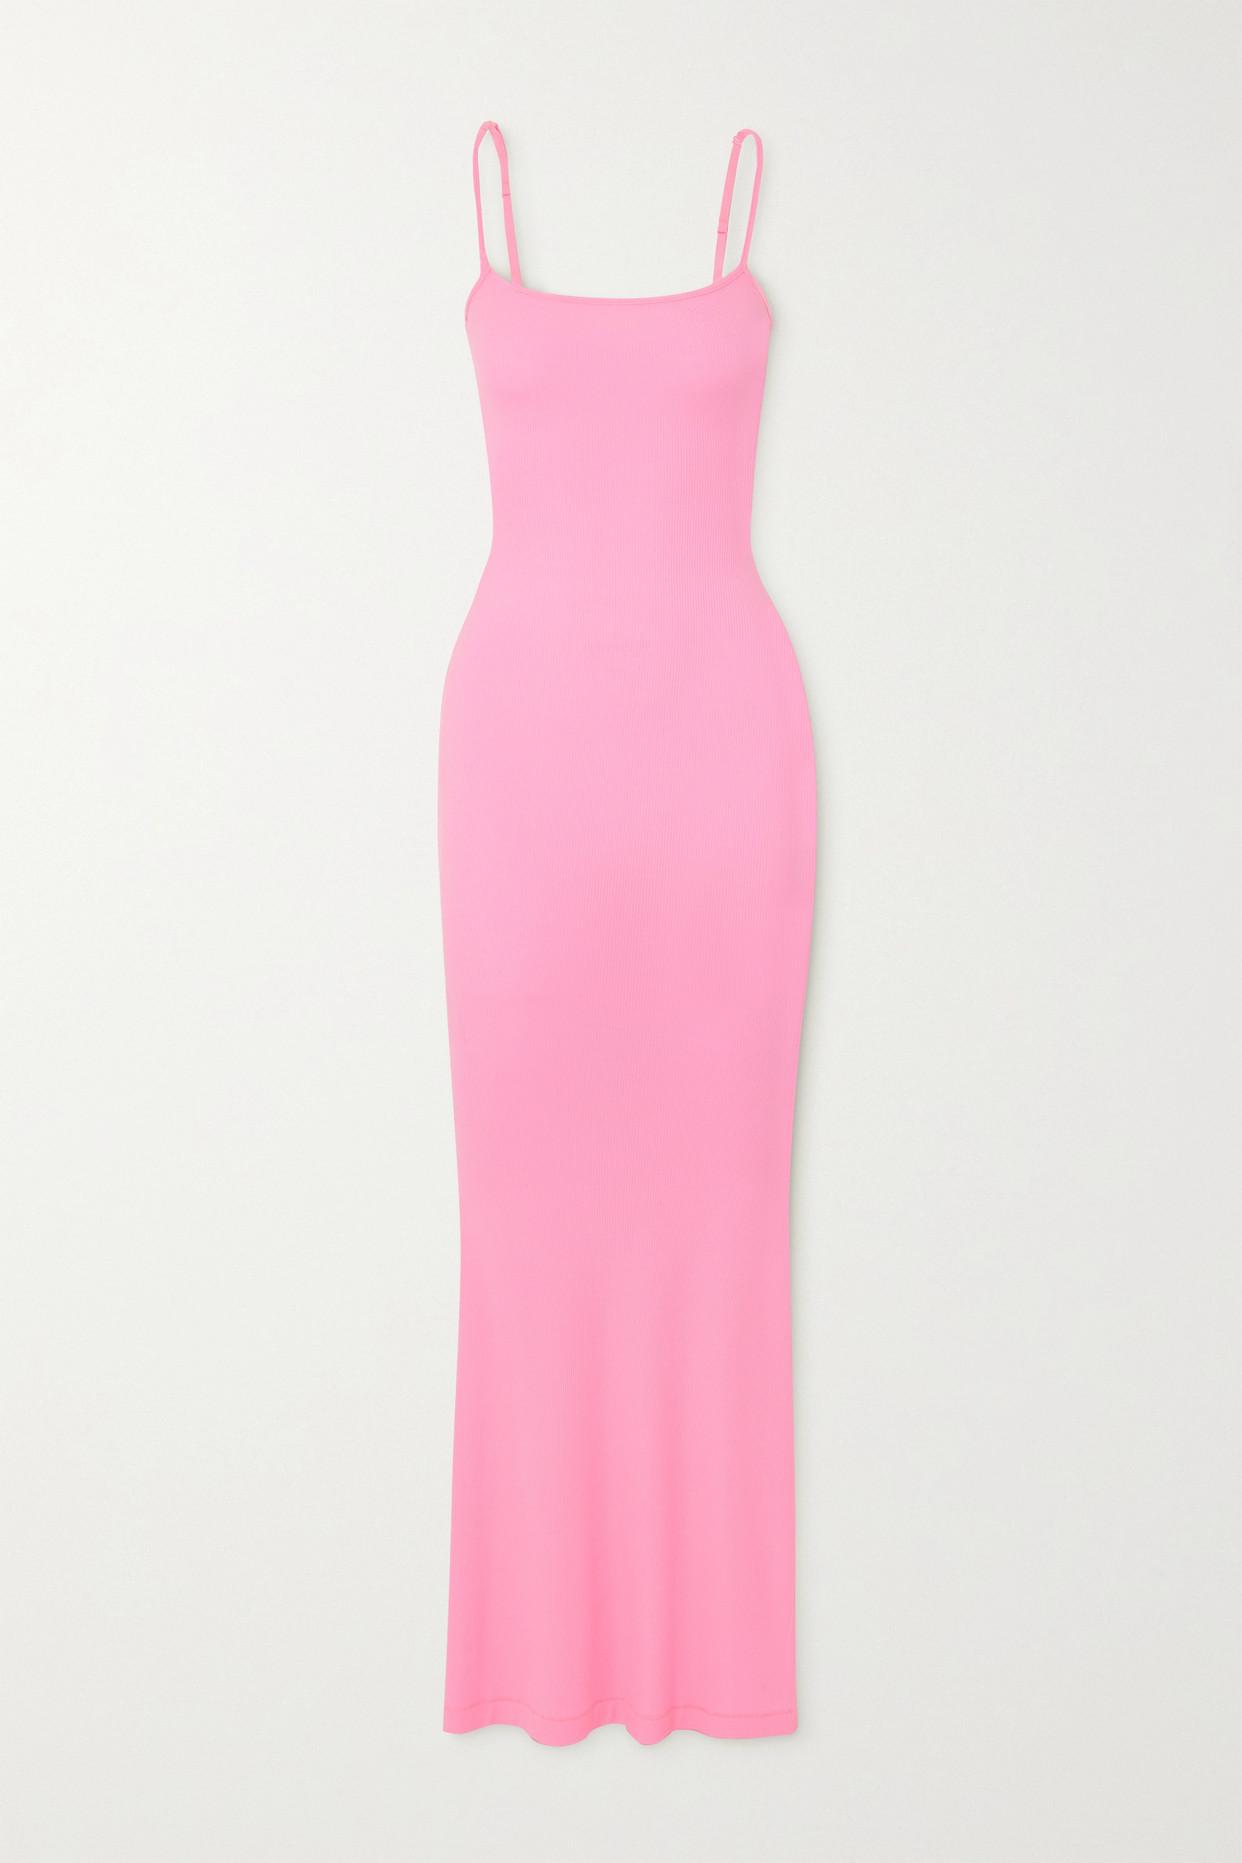 Skims Soft Lounge Long Slip Dress in Pink | Lyst